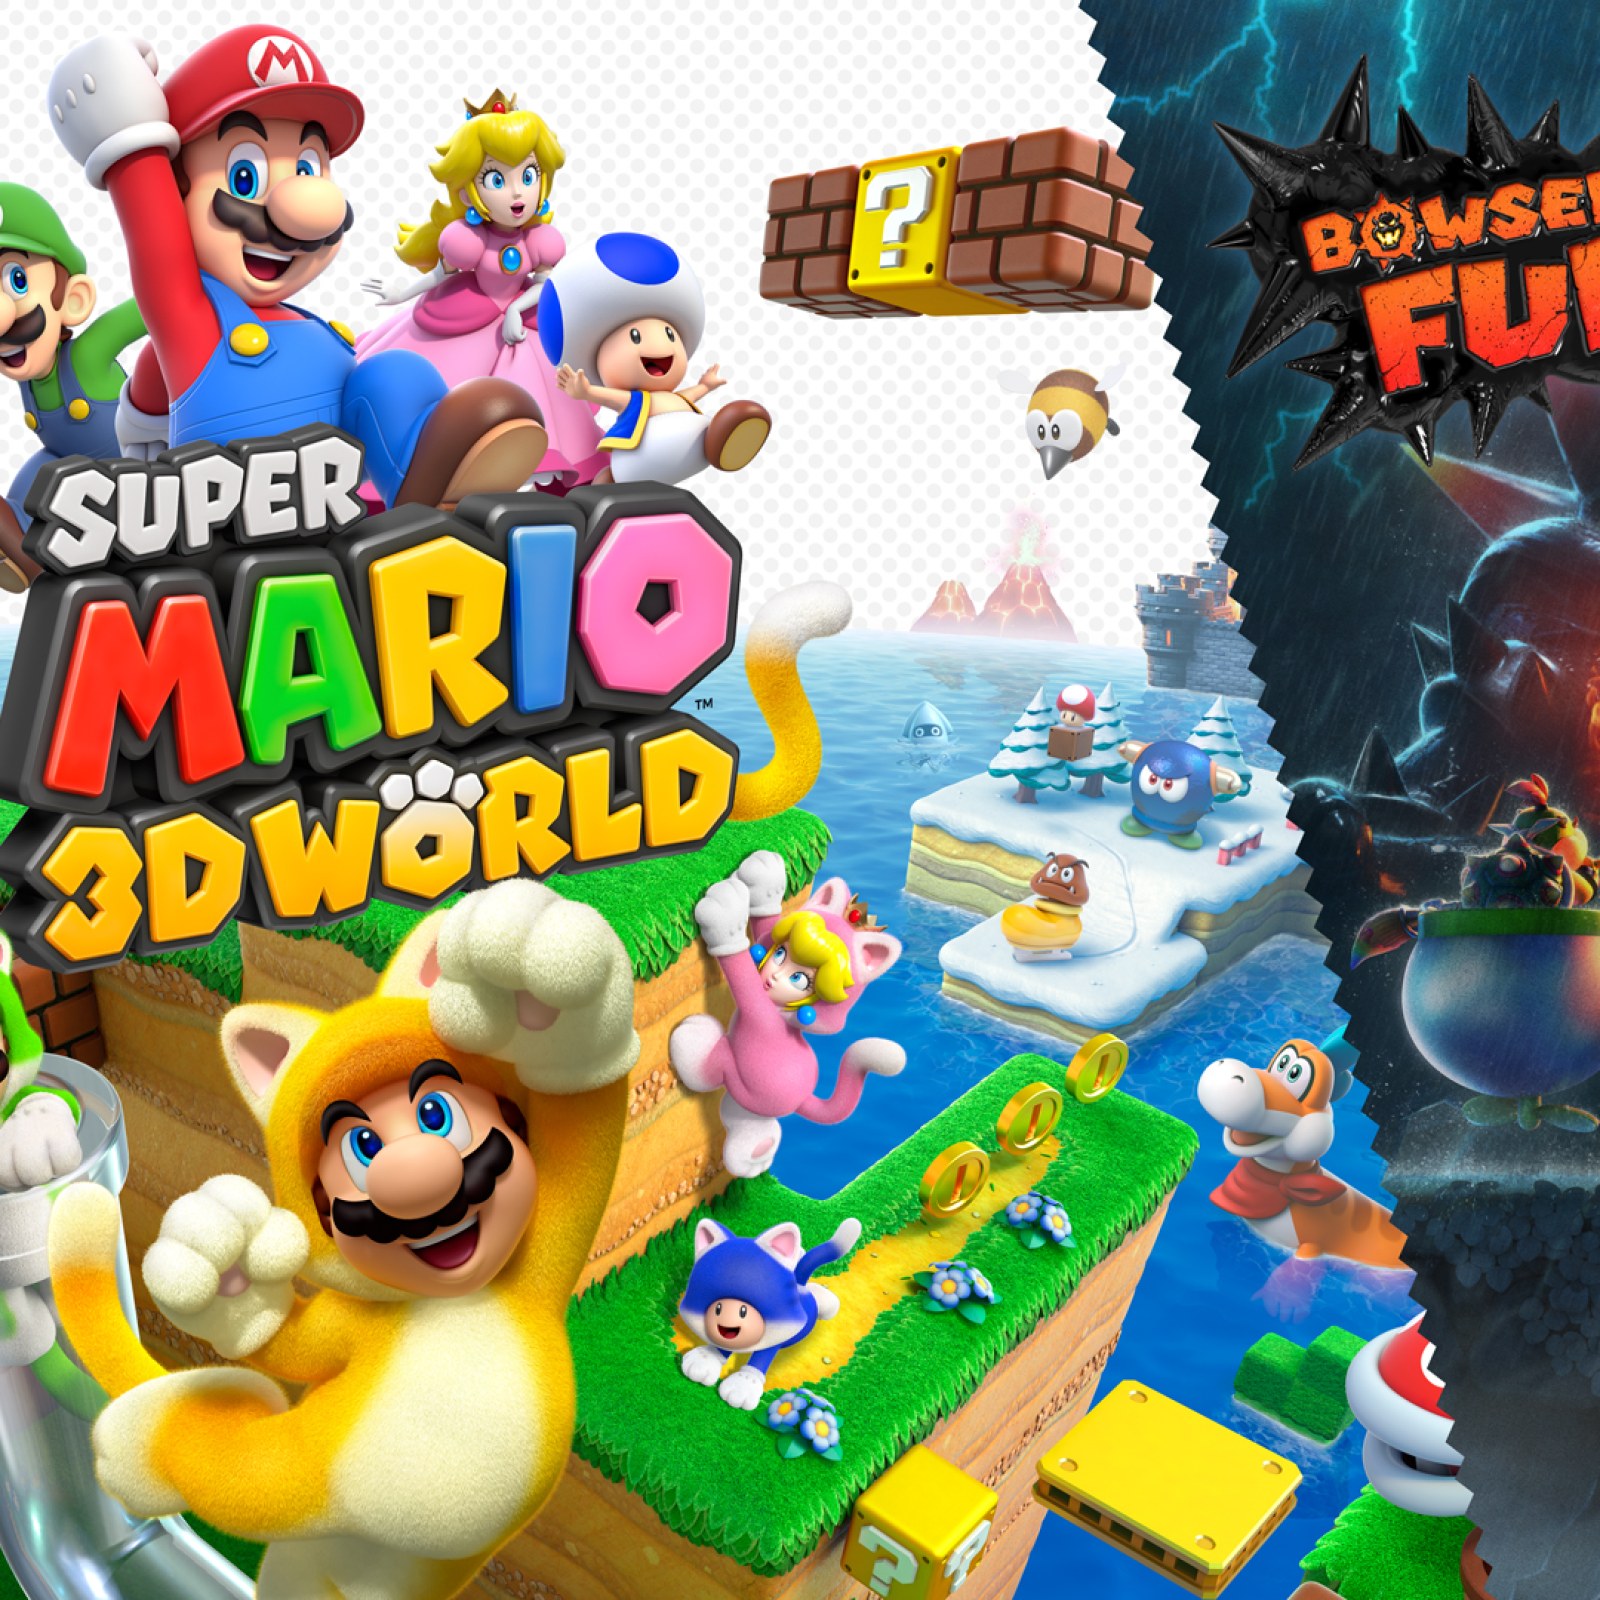 Super Mario 3D World + Bowser's Fury - Édition Standard